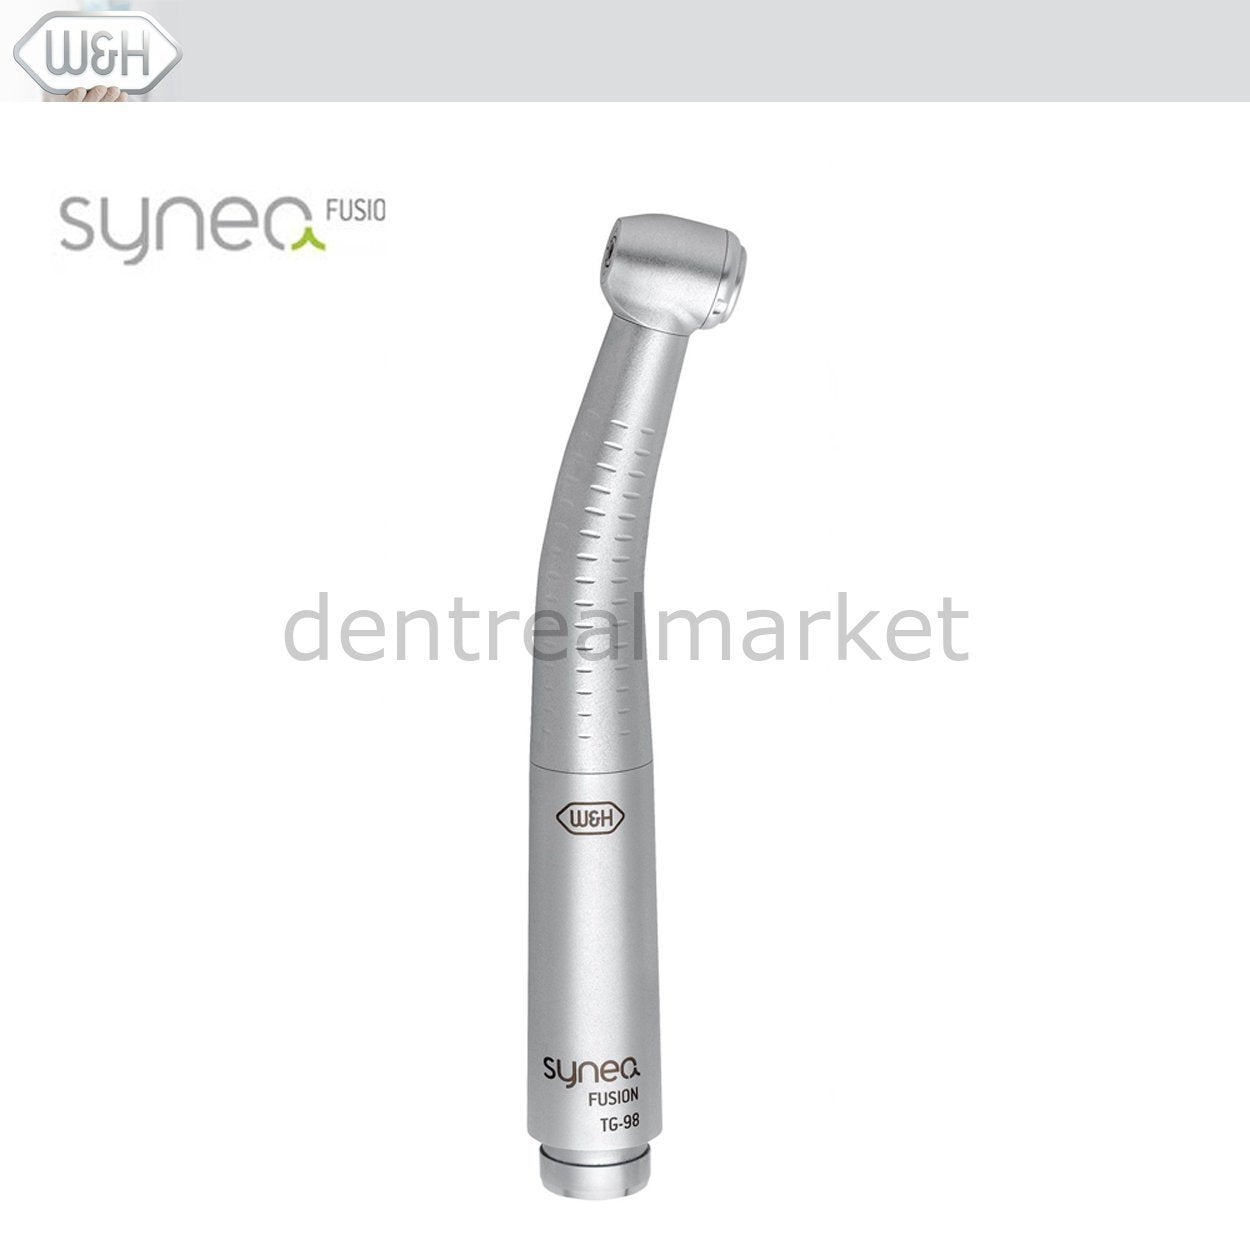 DentrealStore - W&H Dental Synea Fusion Turbine - TG-98